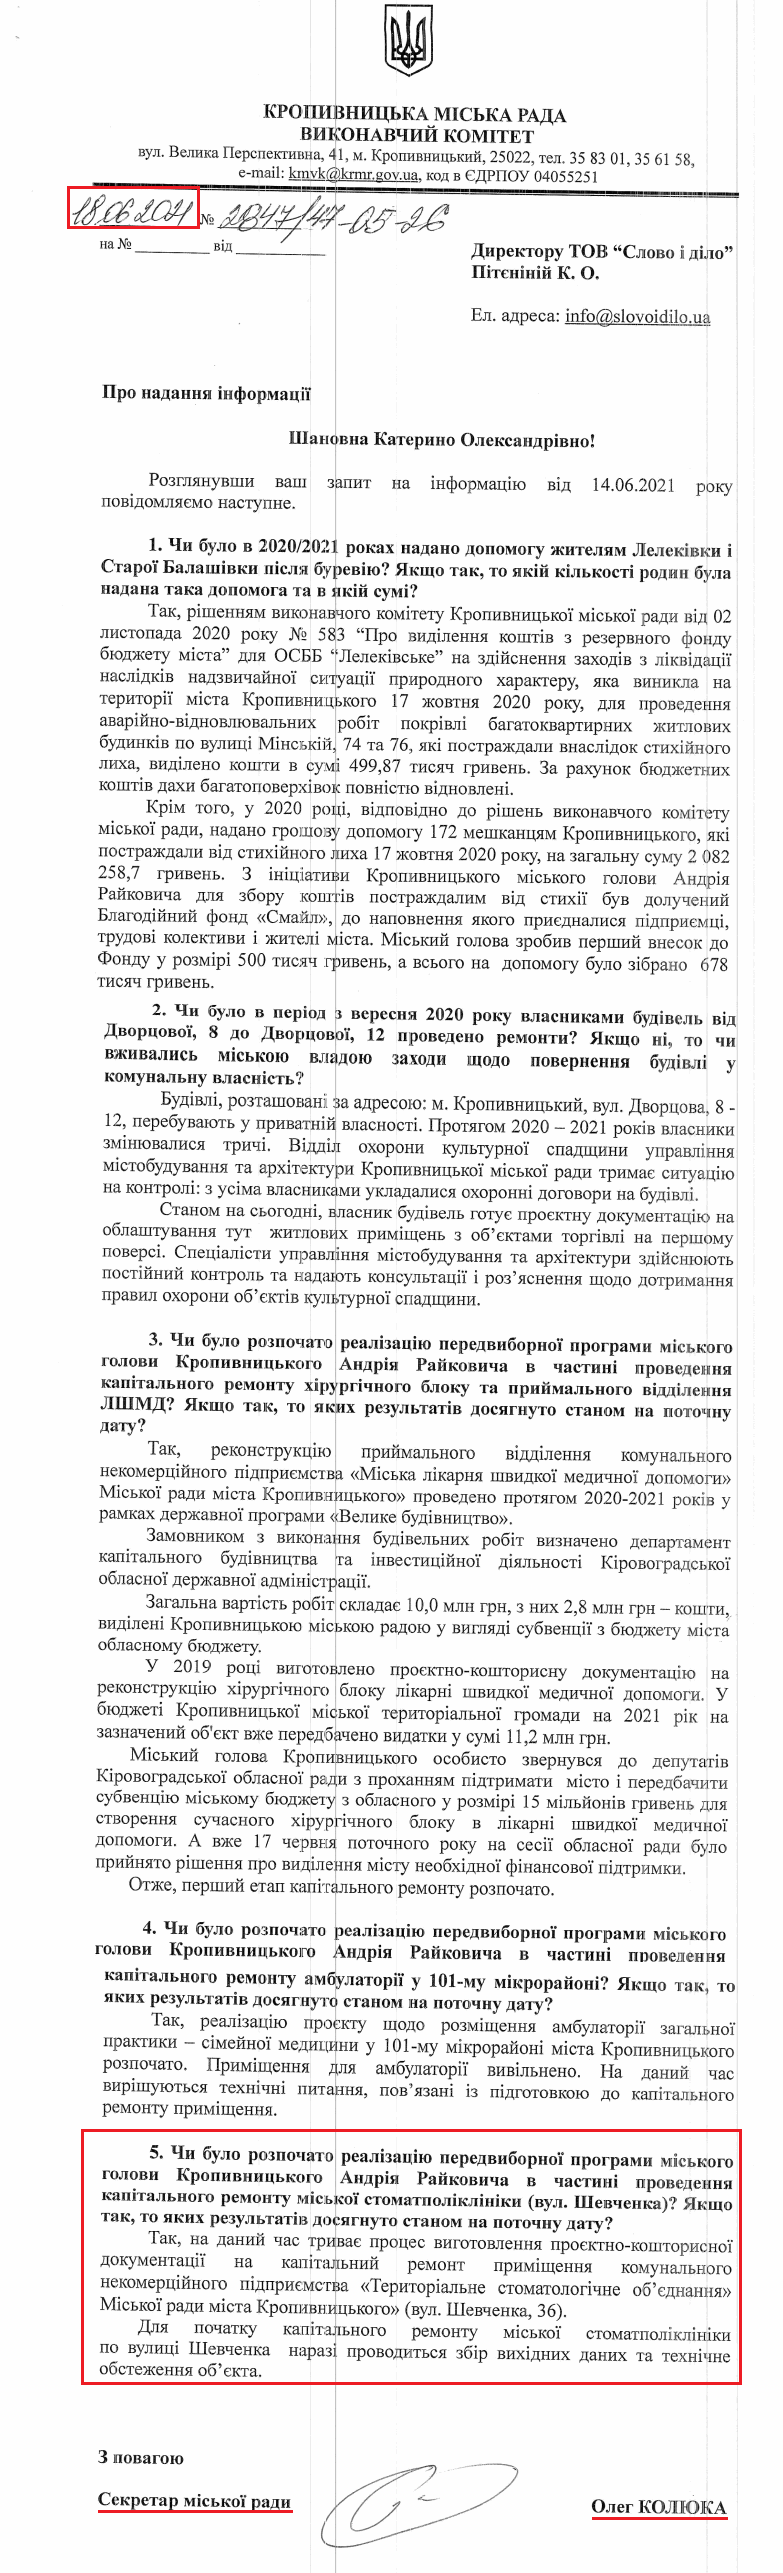 Лист секретаря міської ради Олега Колюка